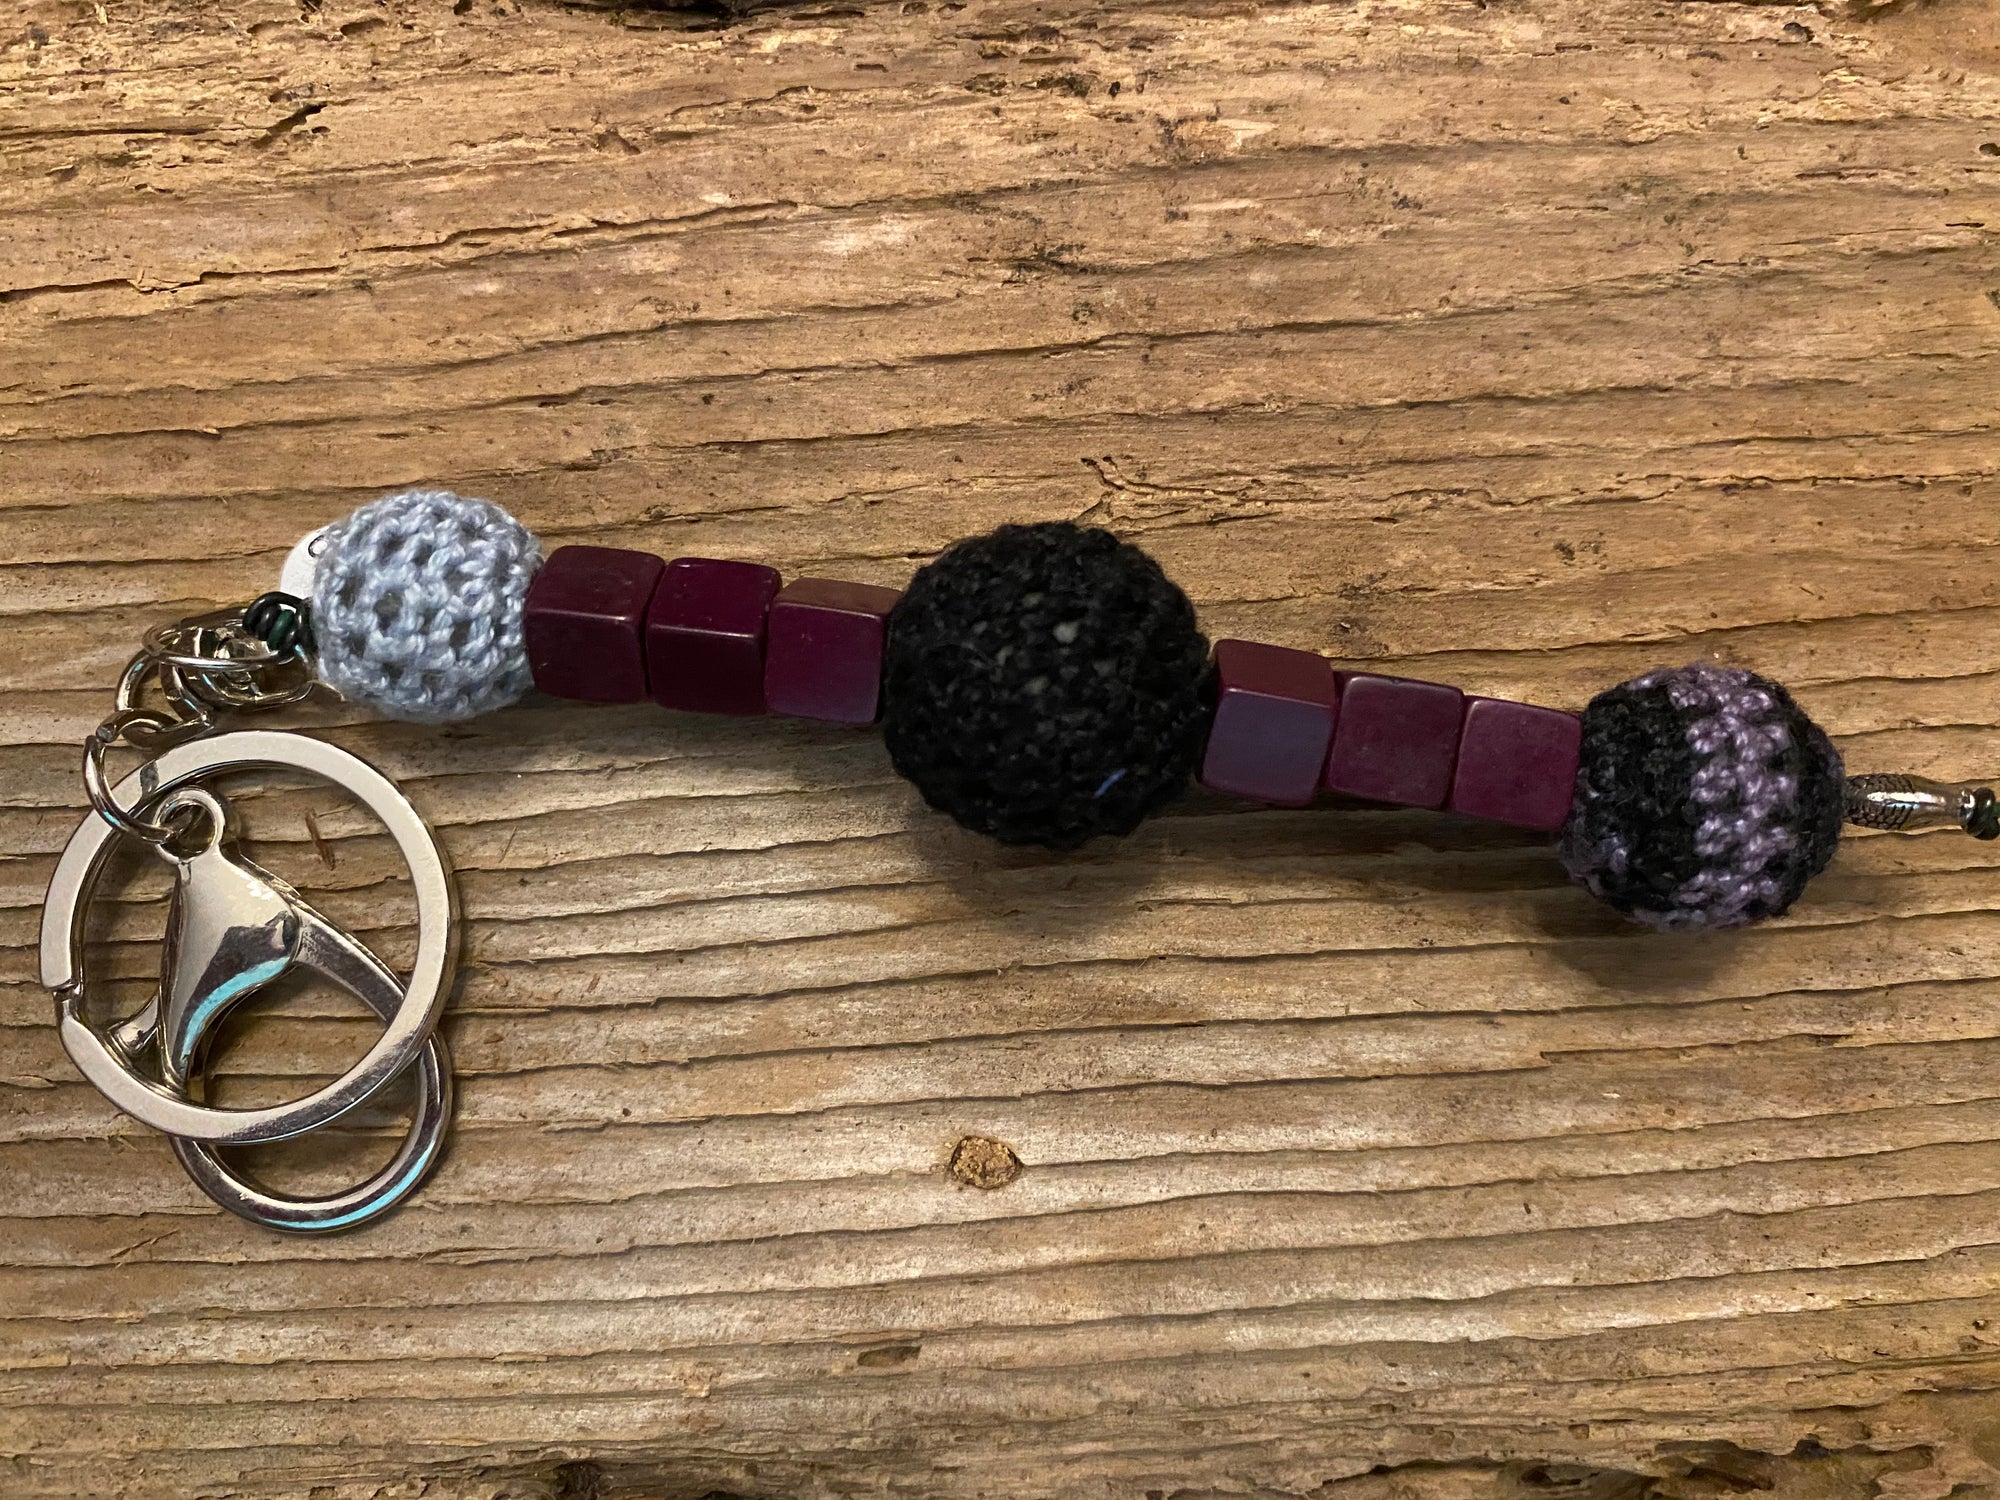 Shanga Keychain grey and black macrame beads with plum howlite squares